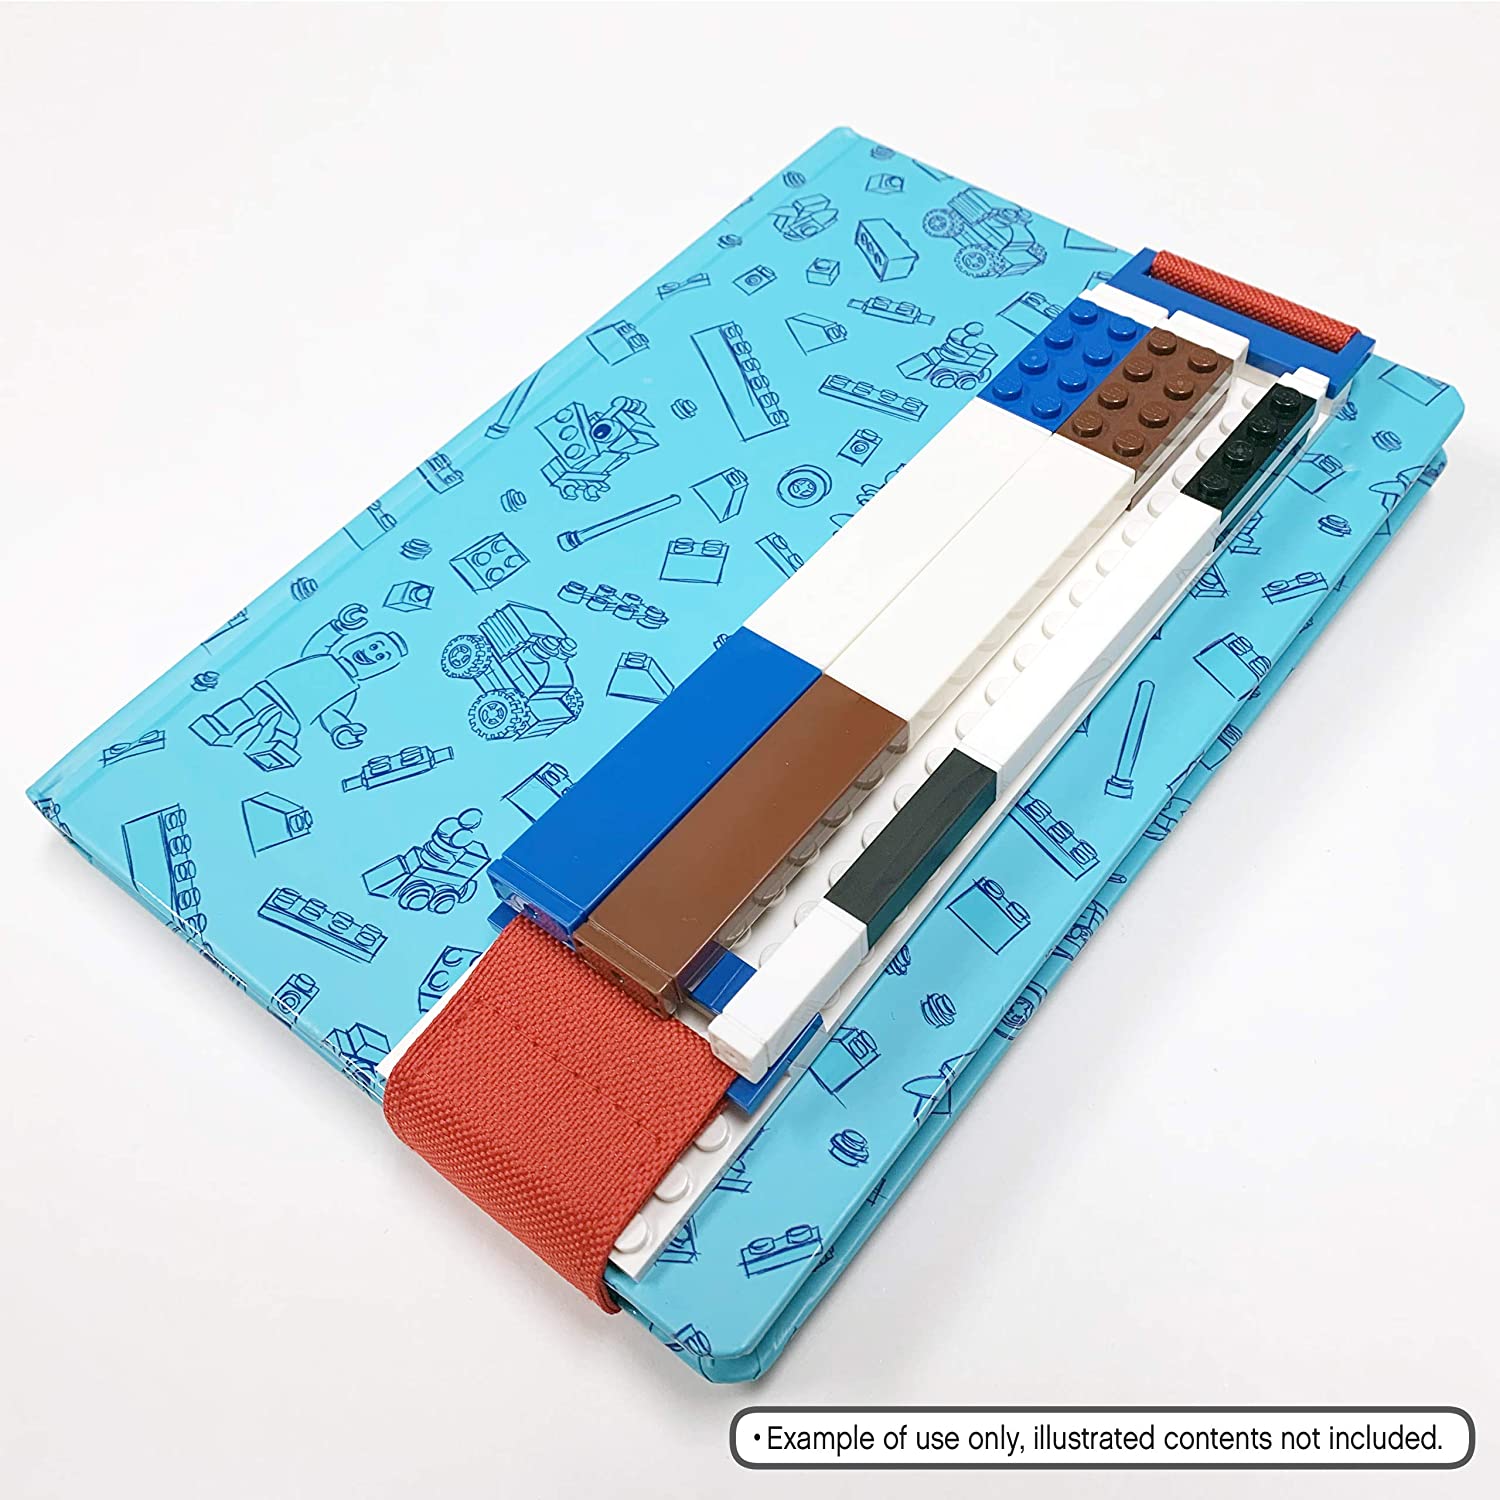 5 Unique Gift Ideas Every LEGO Loving Kid Needs - www.craftaboo.com